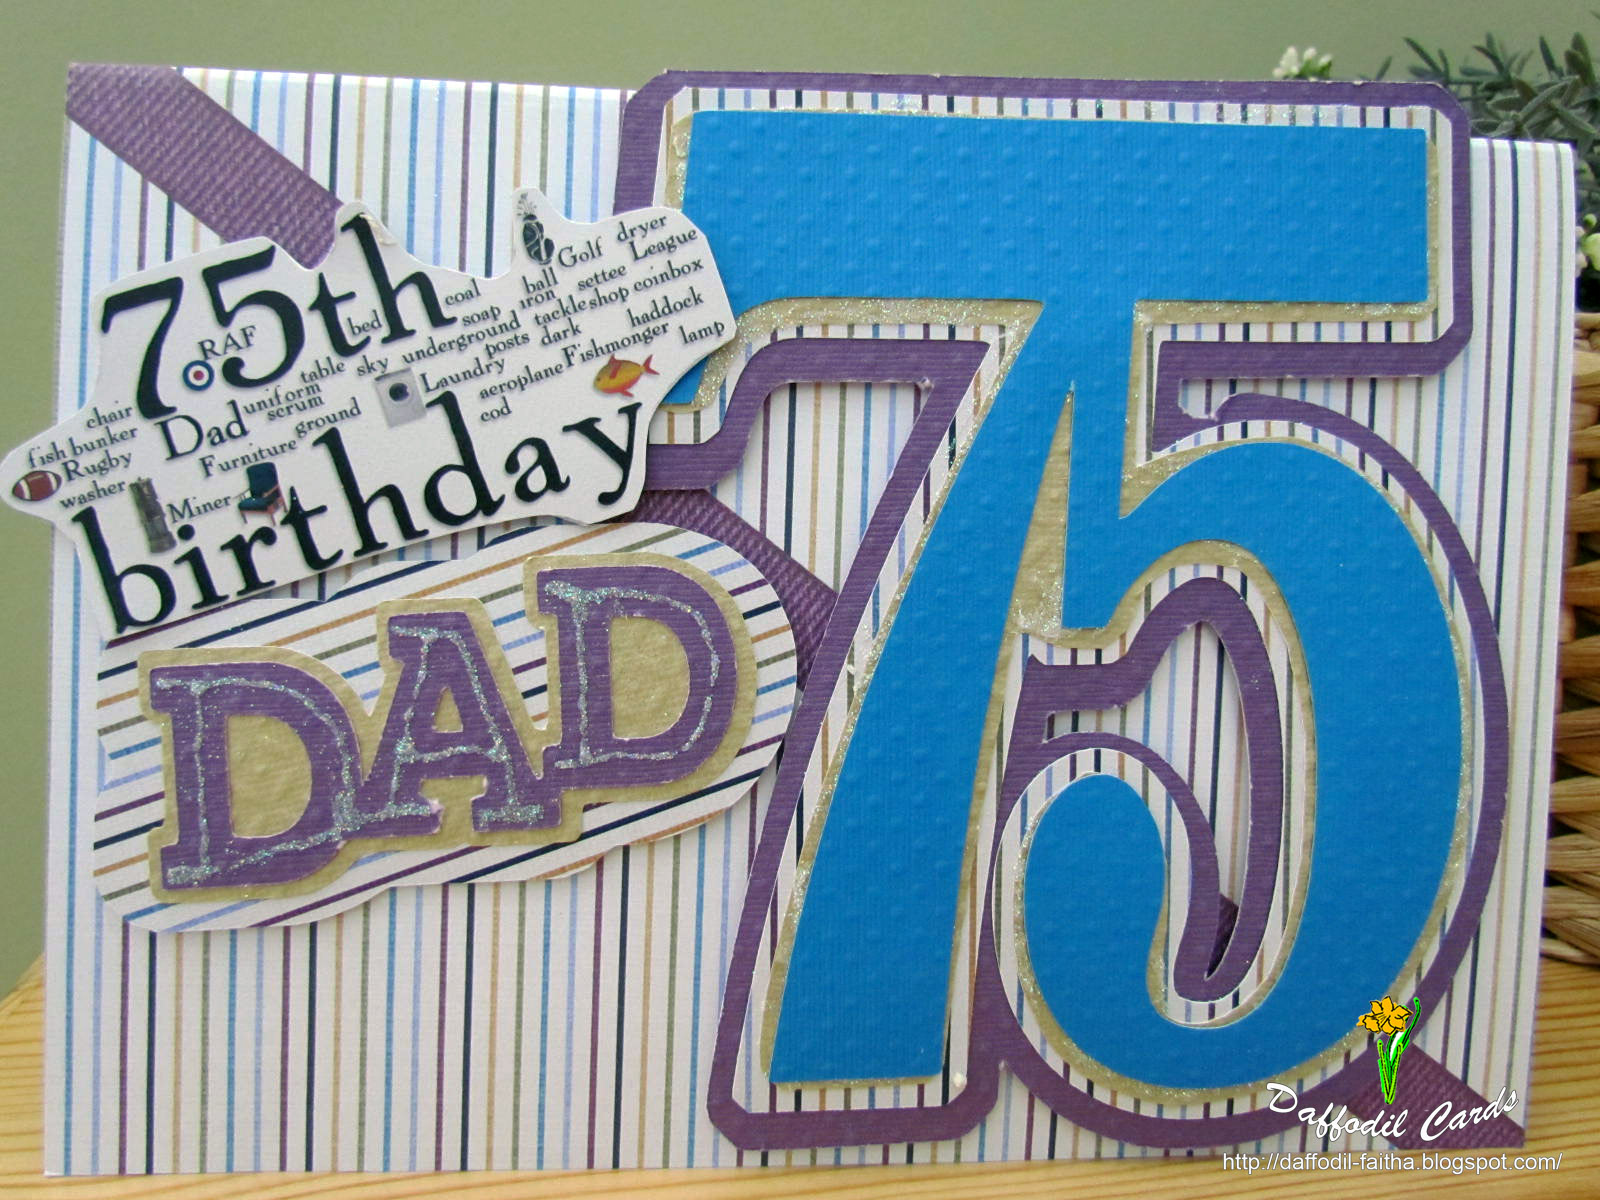 75th-birthday-wishes